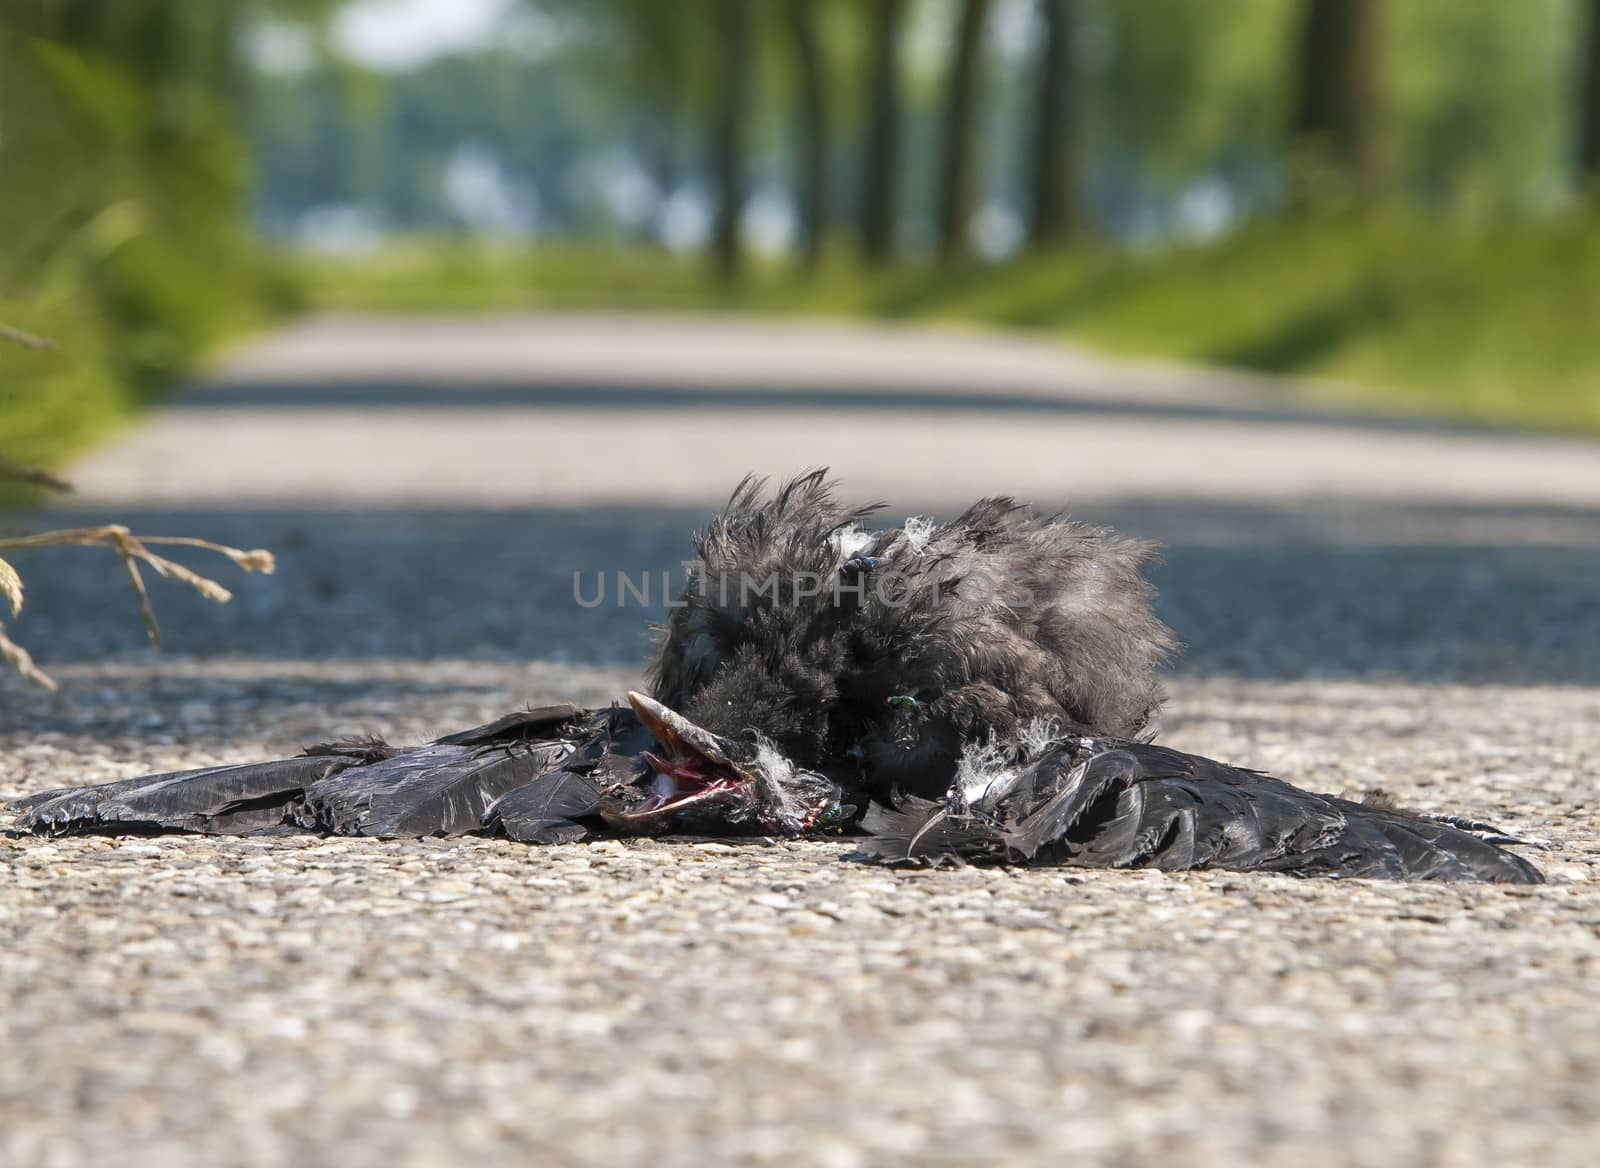 dead bird on the asphalt highway with moving car